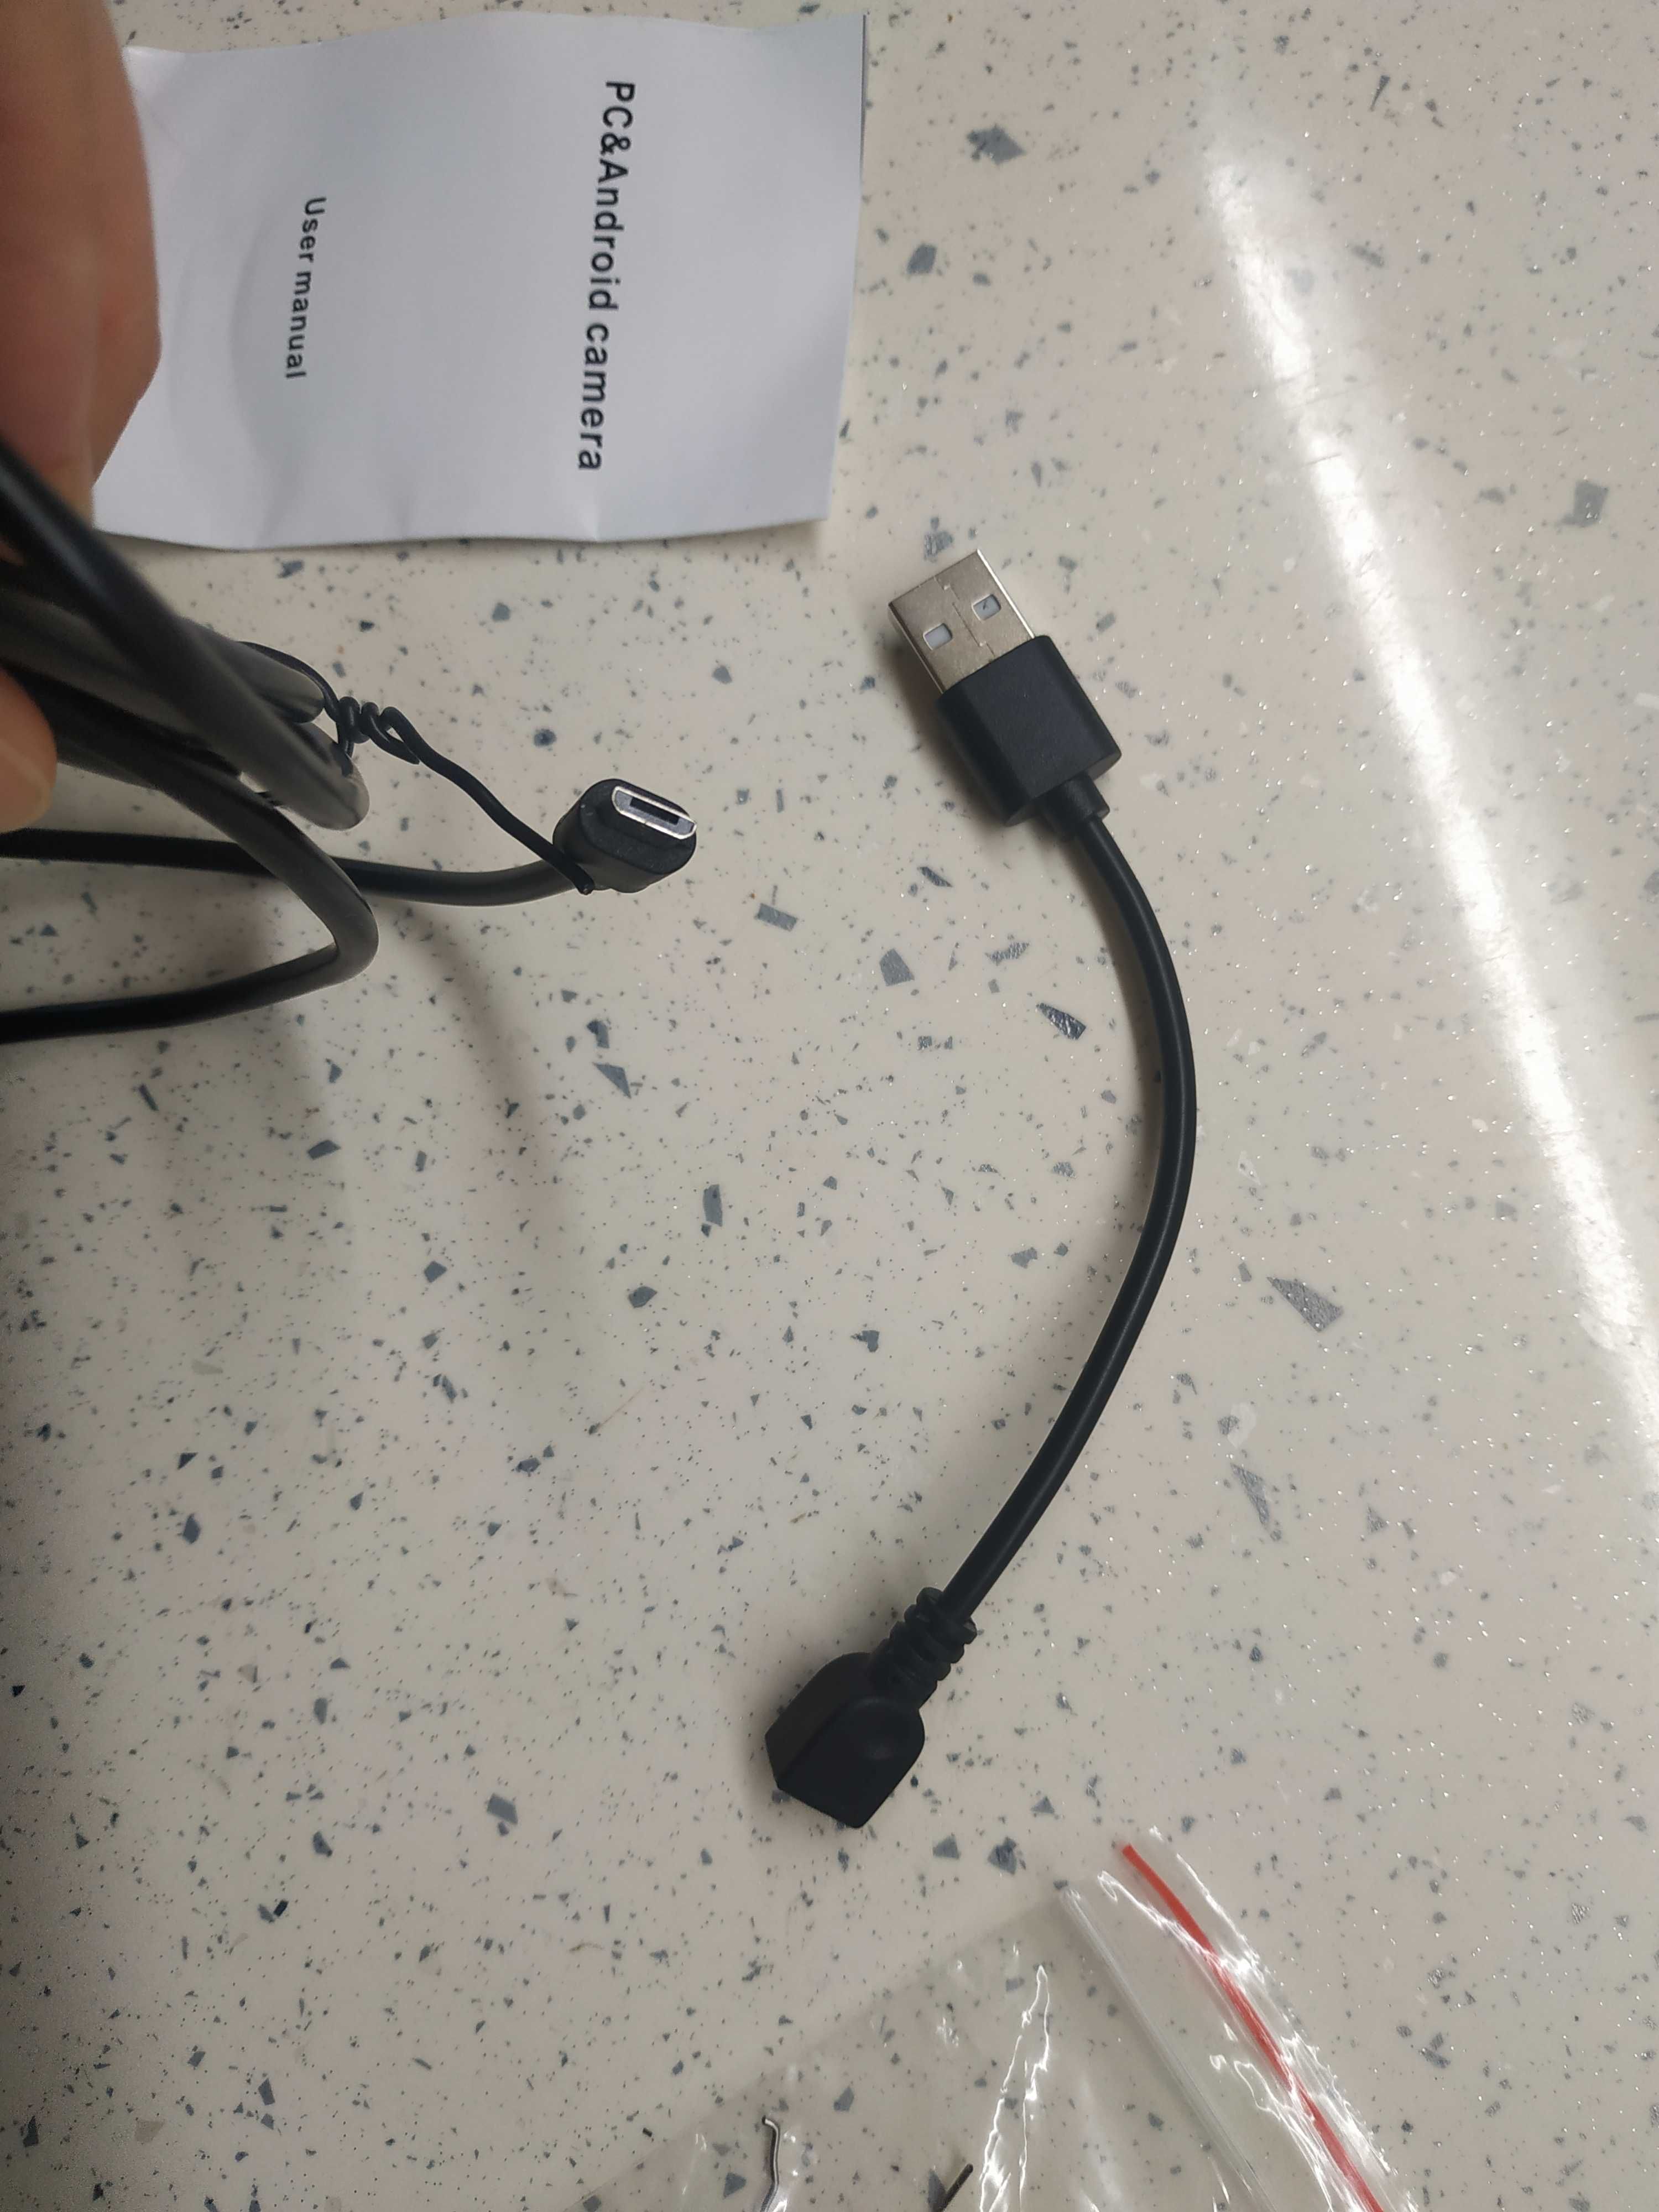 Эндоскоп / Камера 7/5.5 мм USB/Micro USB/Type-C жесткий кабель